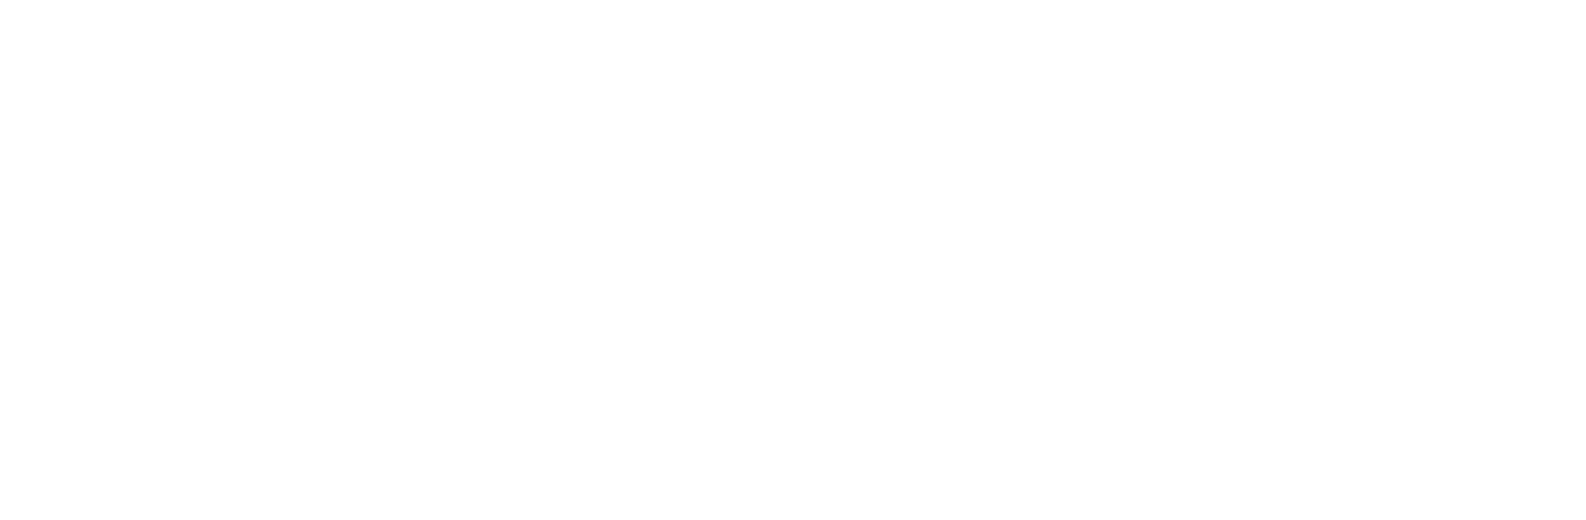 Revvity logo grand pour les fonds sombres (PNG transparent)